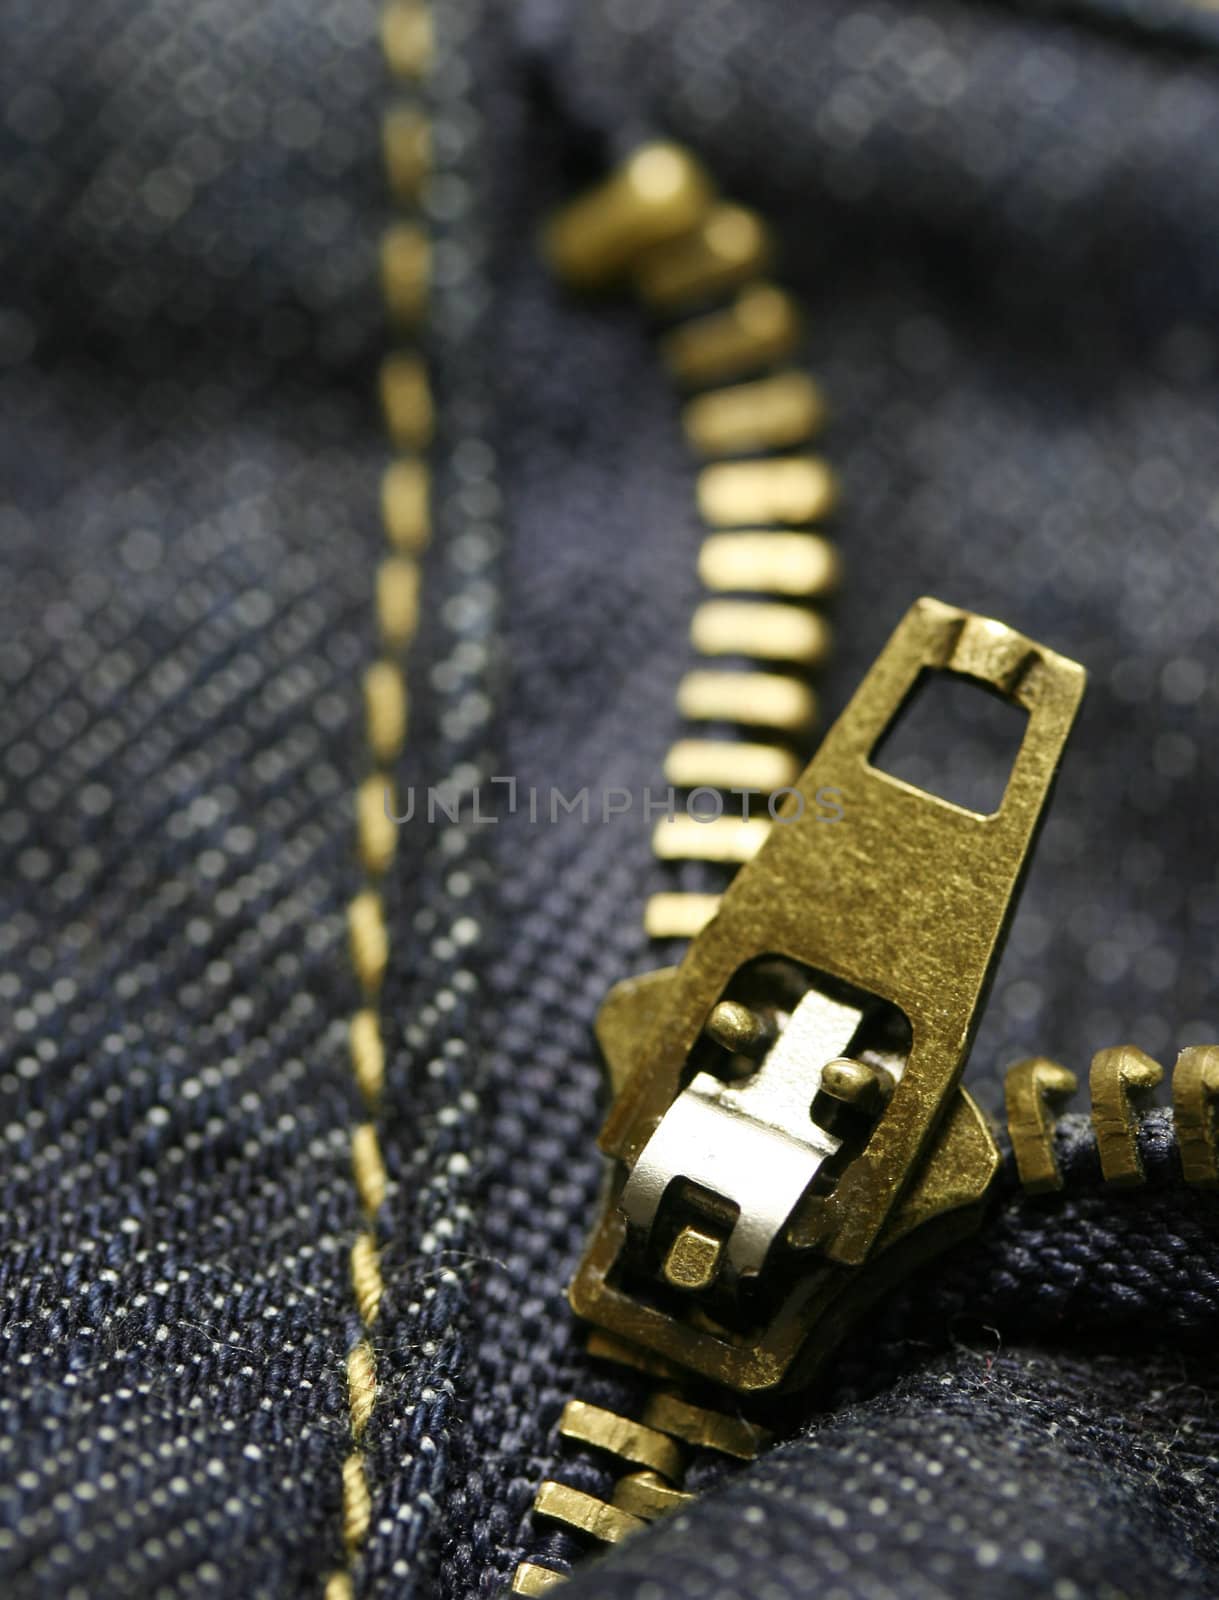 Macro shot of a zipper from blue jeans.